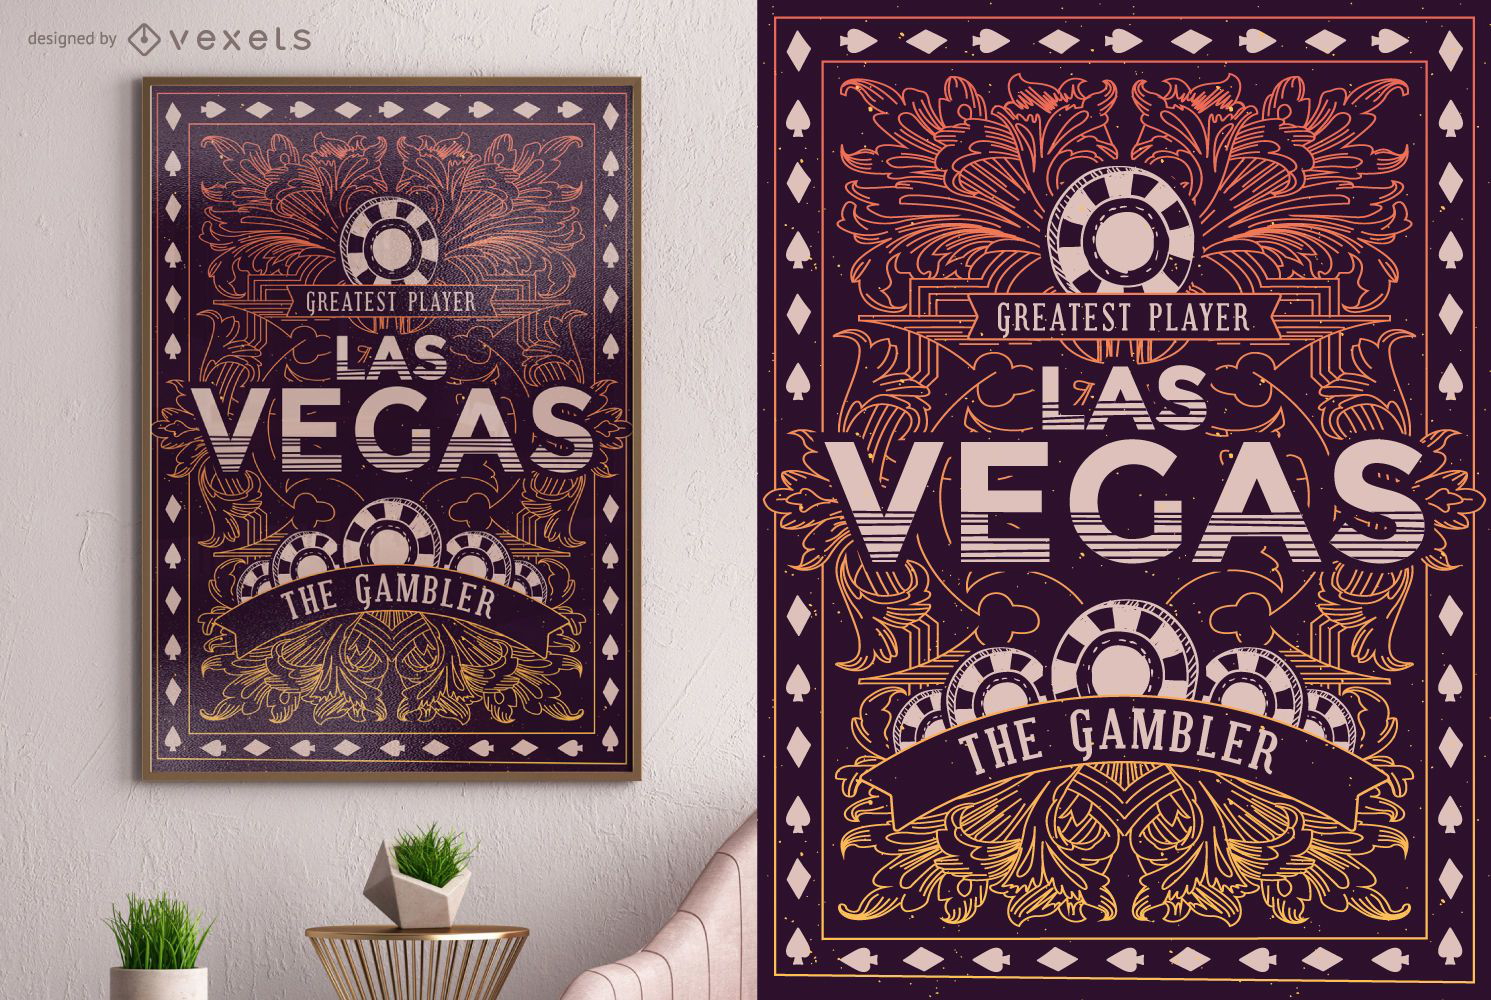 Las Vegas Spieler Poster Design